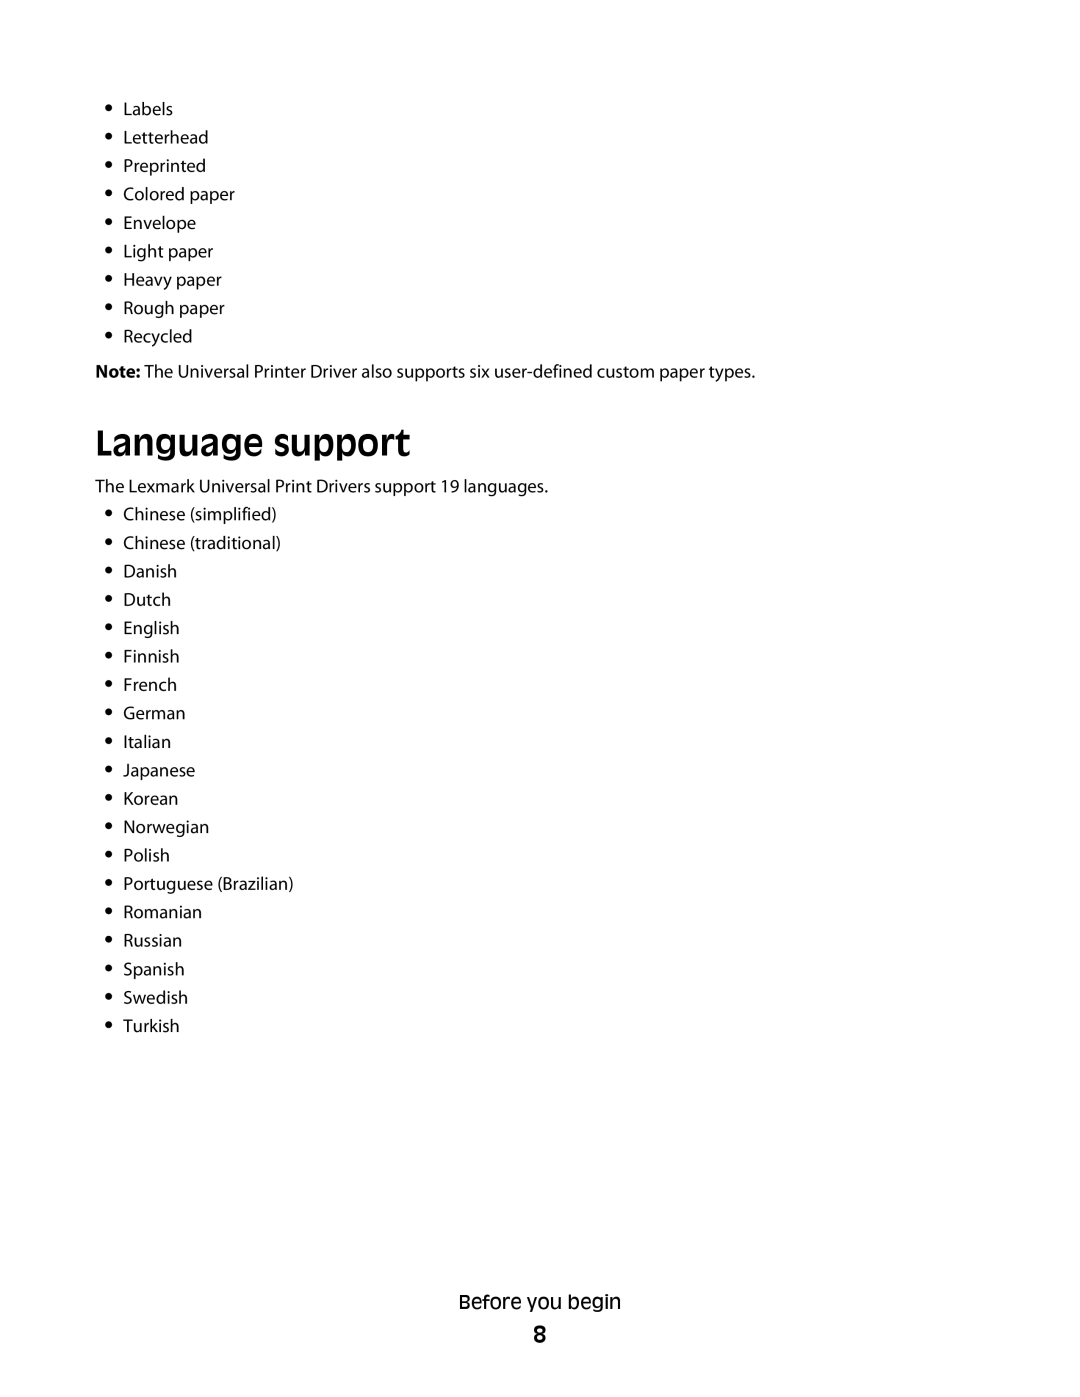 Lexmark Universal Driver manual Language support 